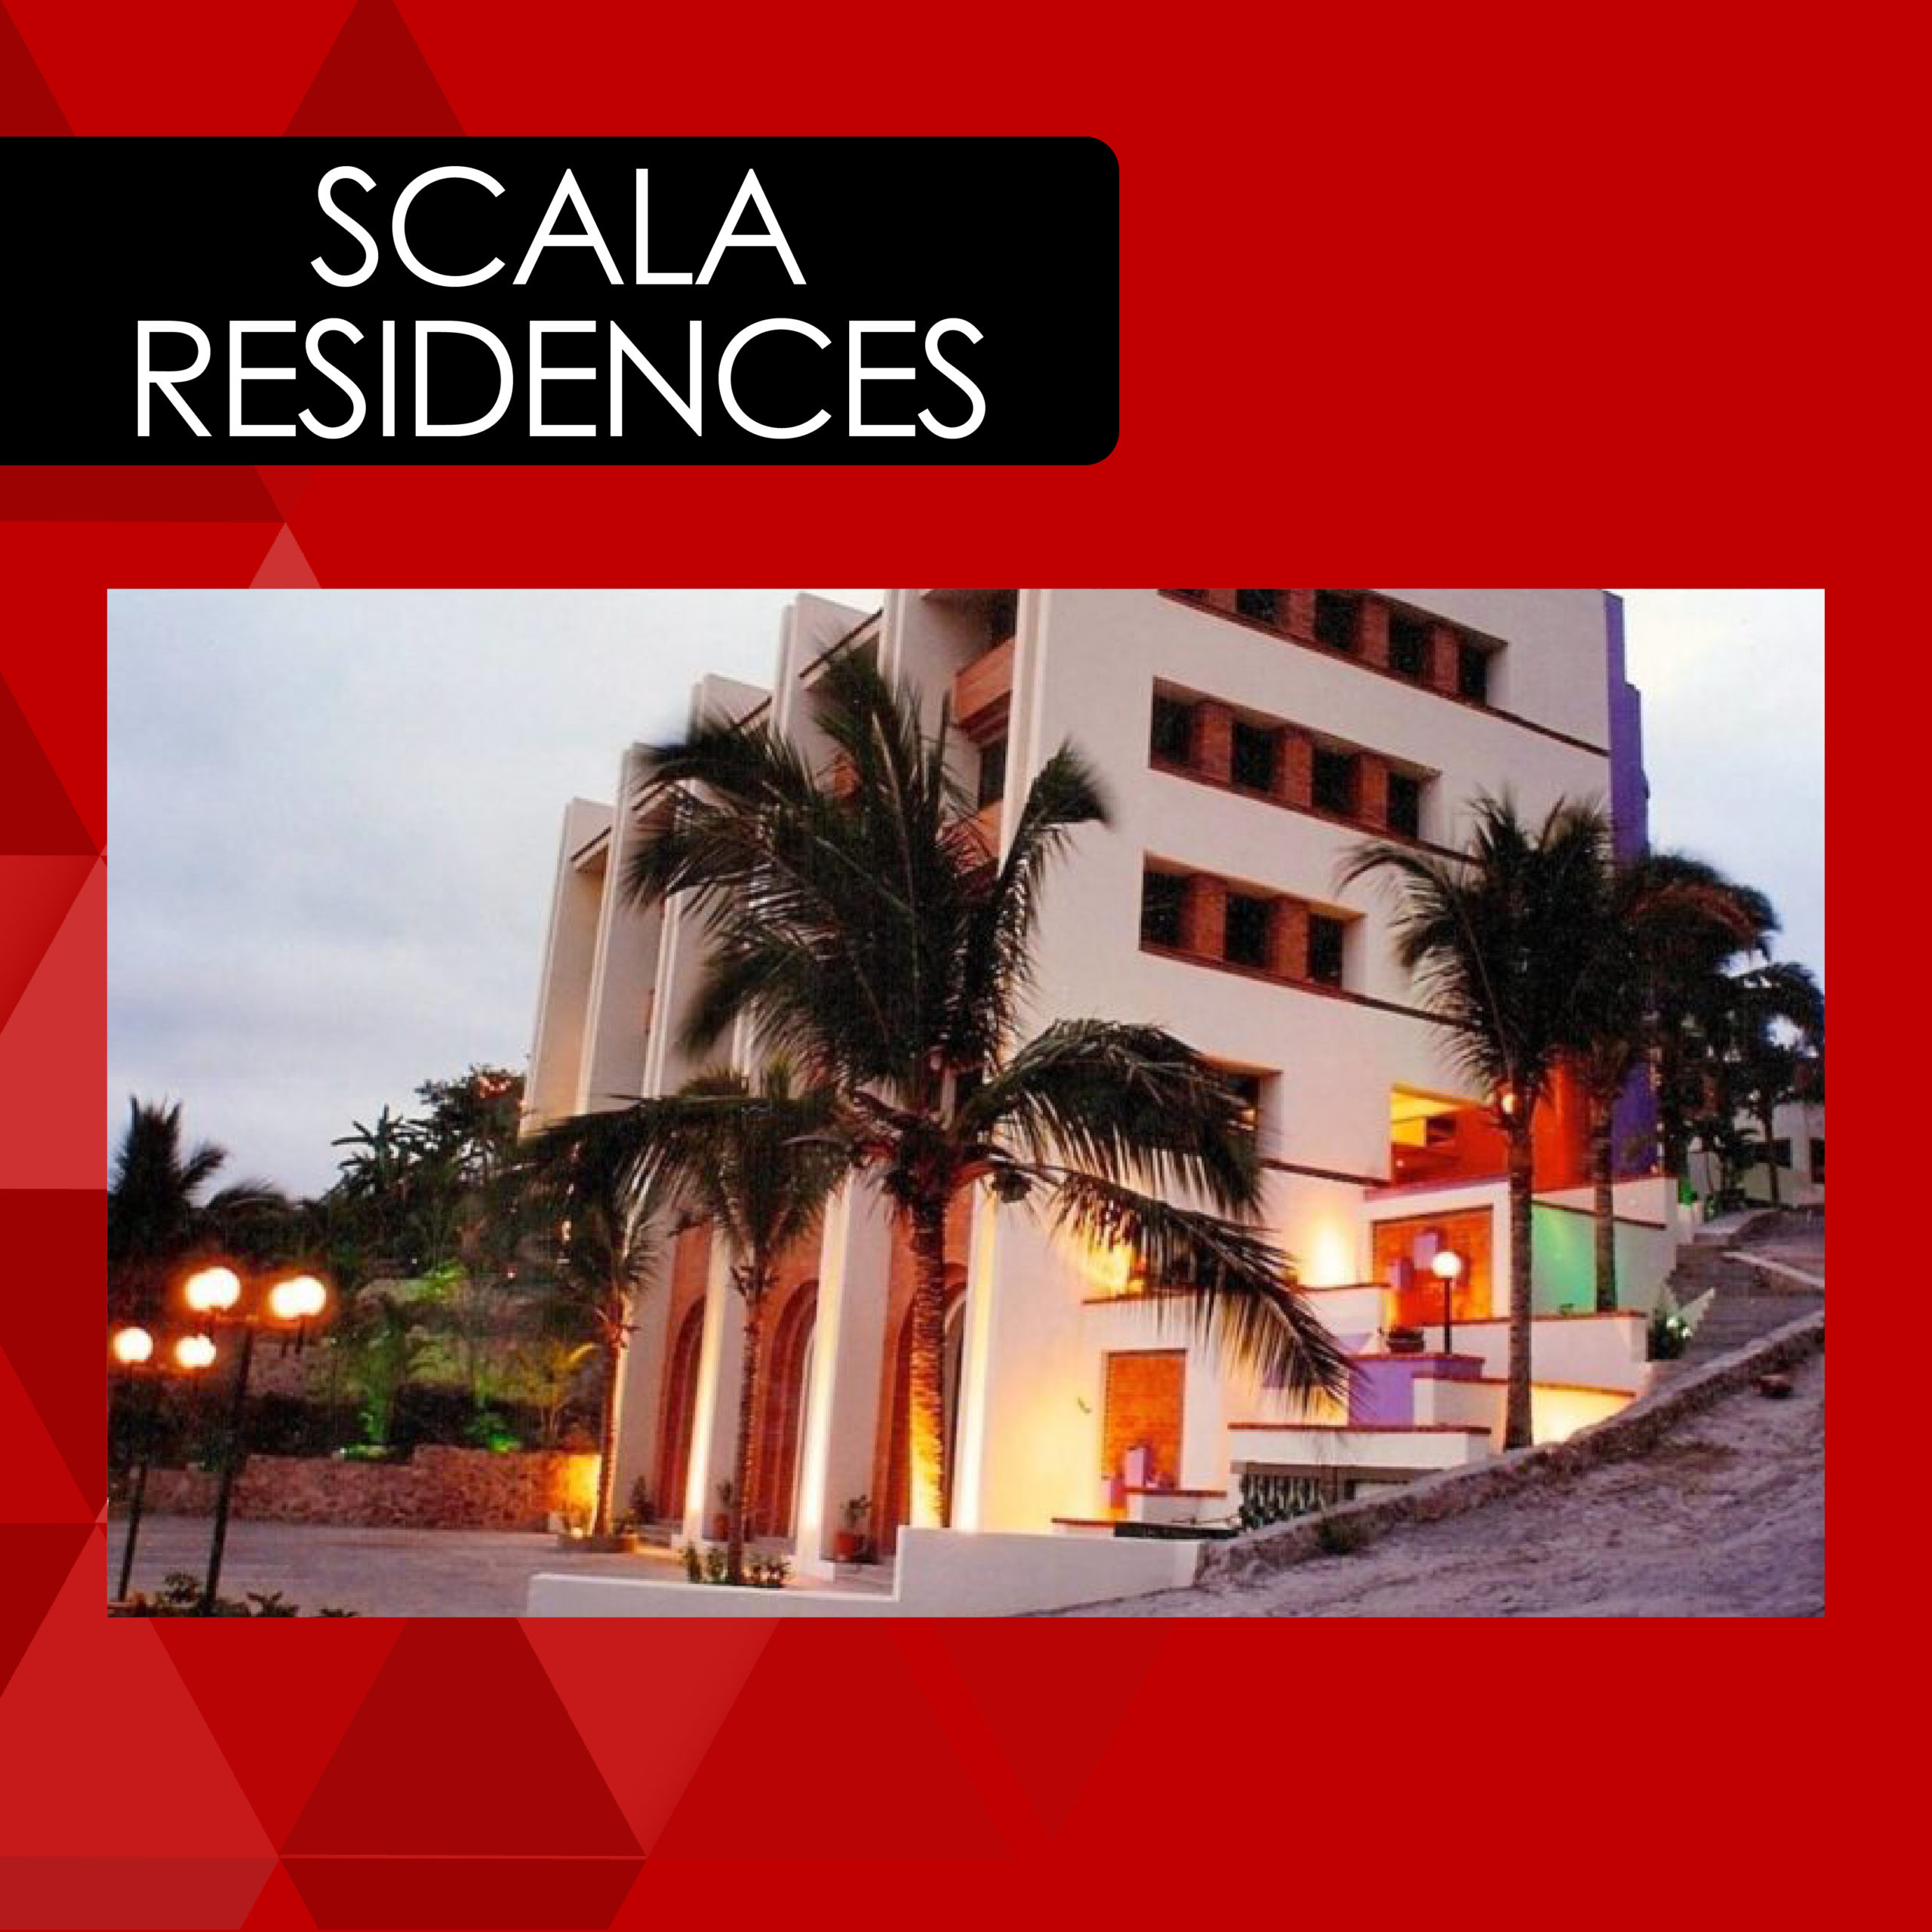 scala residences